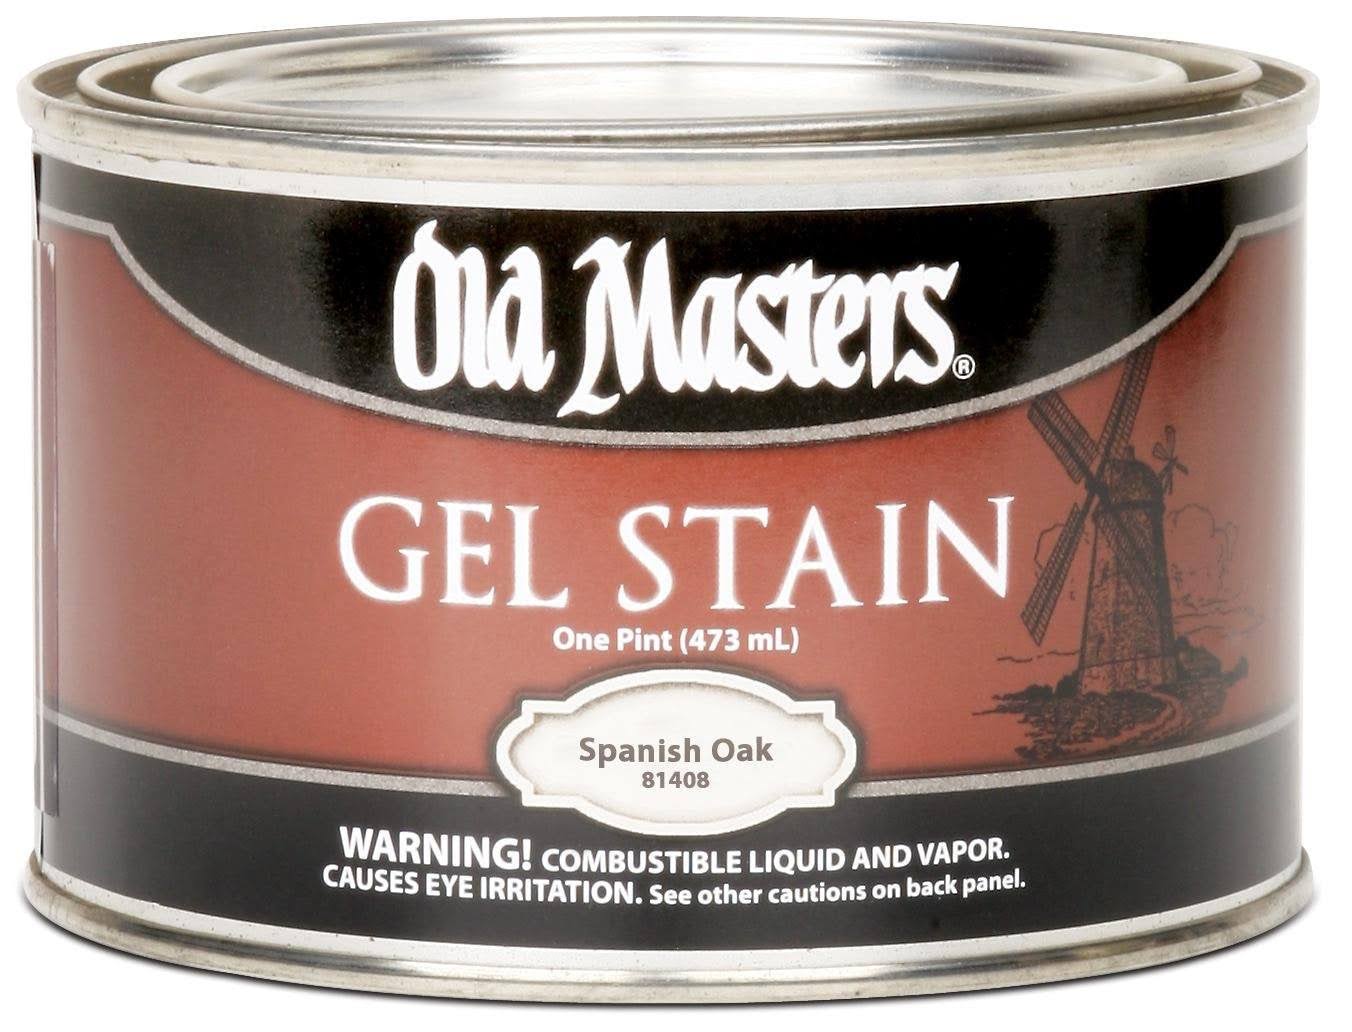 Old Masters Gel Stain - Spanish Oak